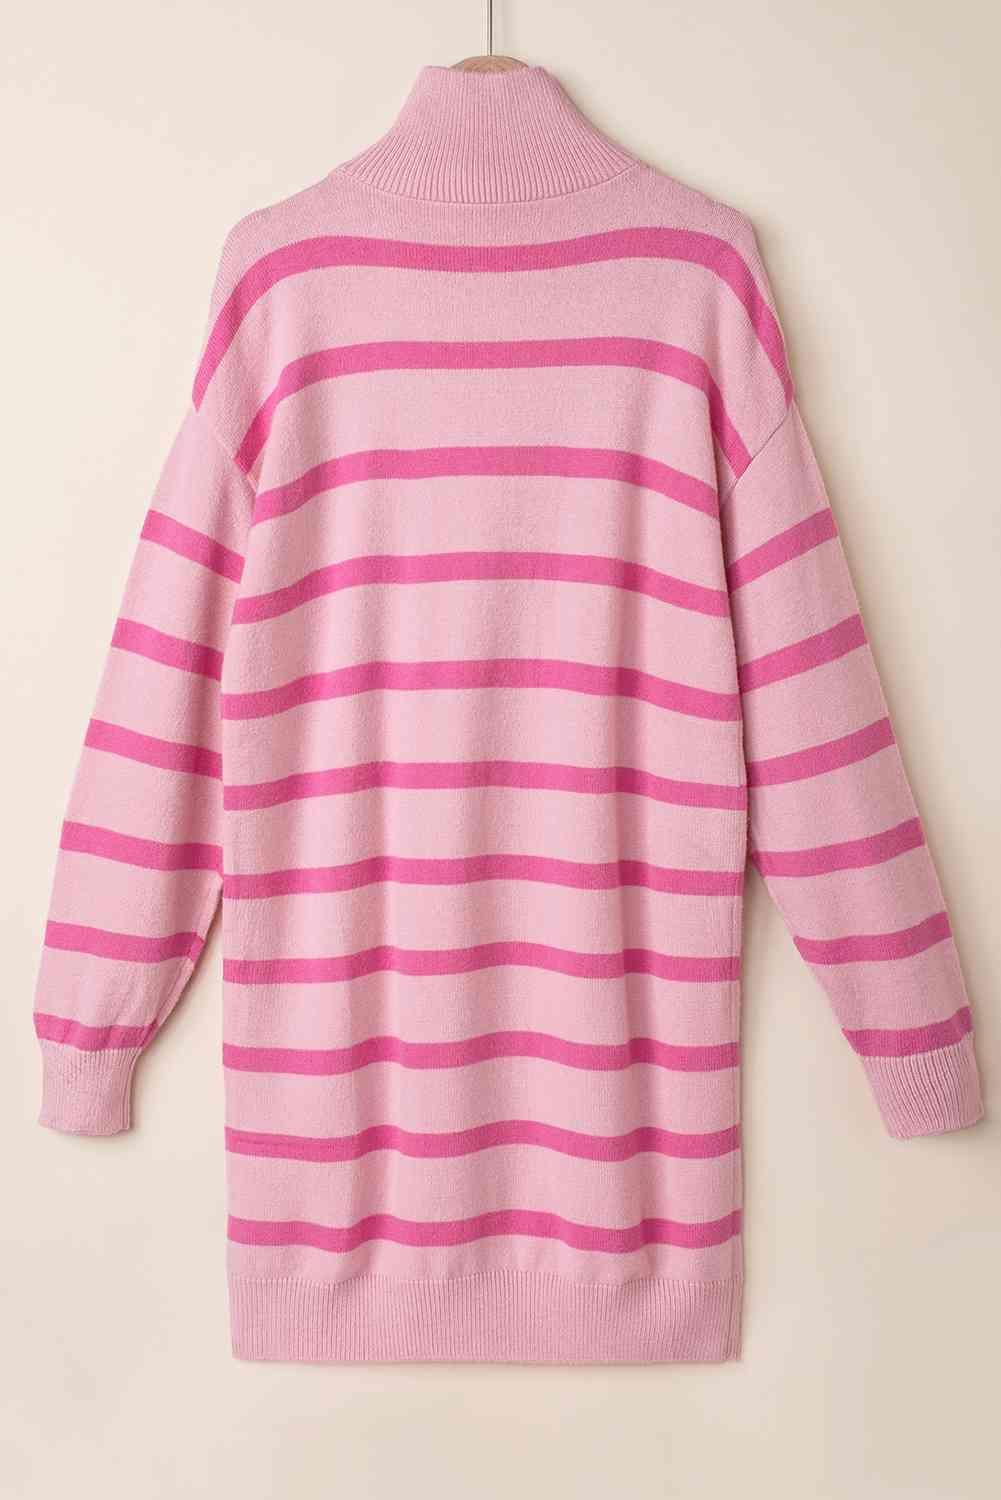 Low Temp Fashion Striped Quarter Zip Sweater Dress - MXSTUDIO.COM